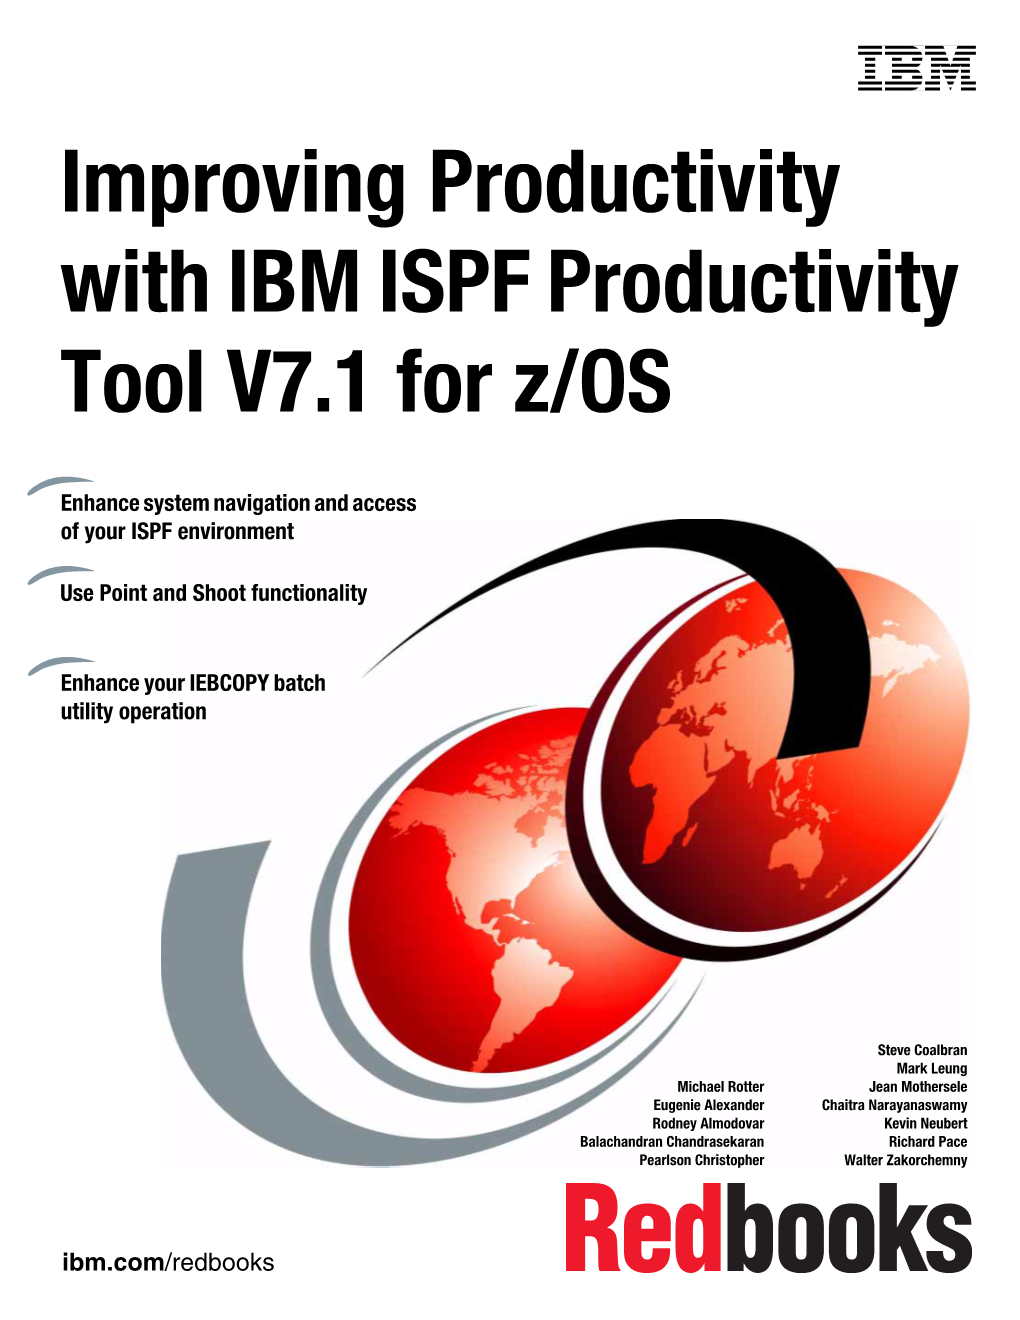 Improving Productivity with IBM ISPF Productivity Tool V7.1 for Z/OS